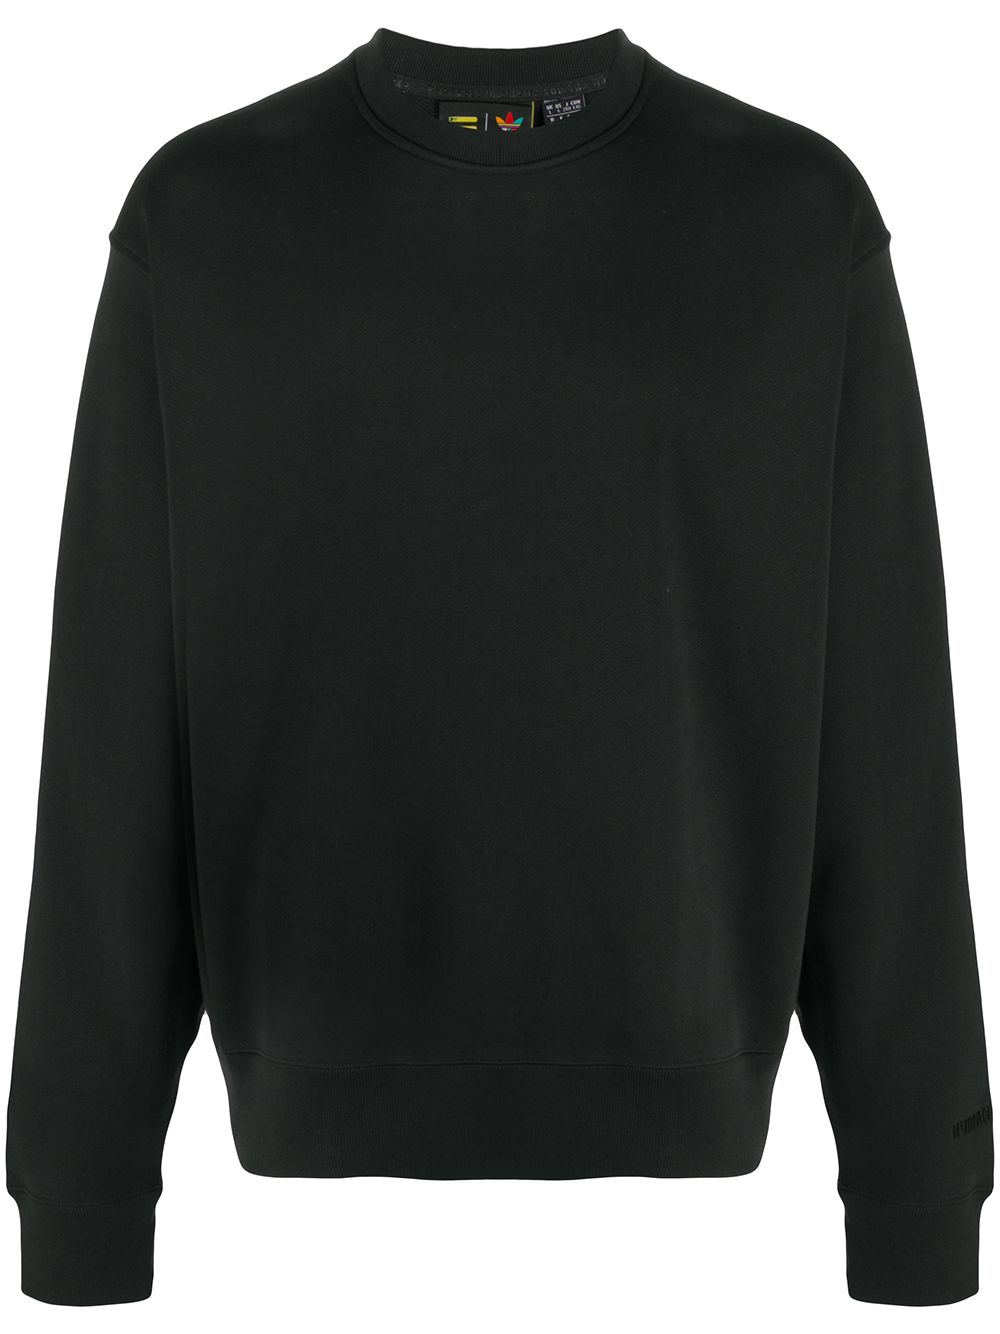 adidas x Pharrell Williams long sleeve sweatshirt - Black von adidas